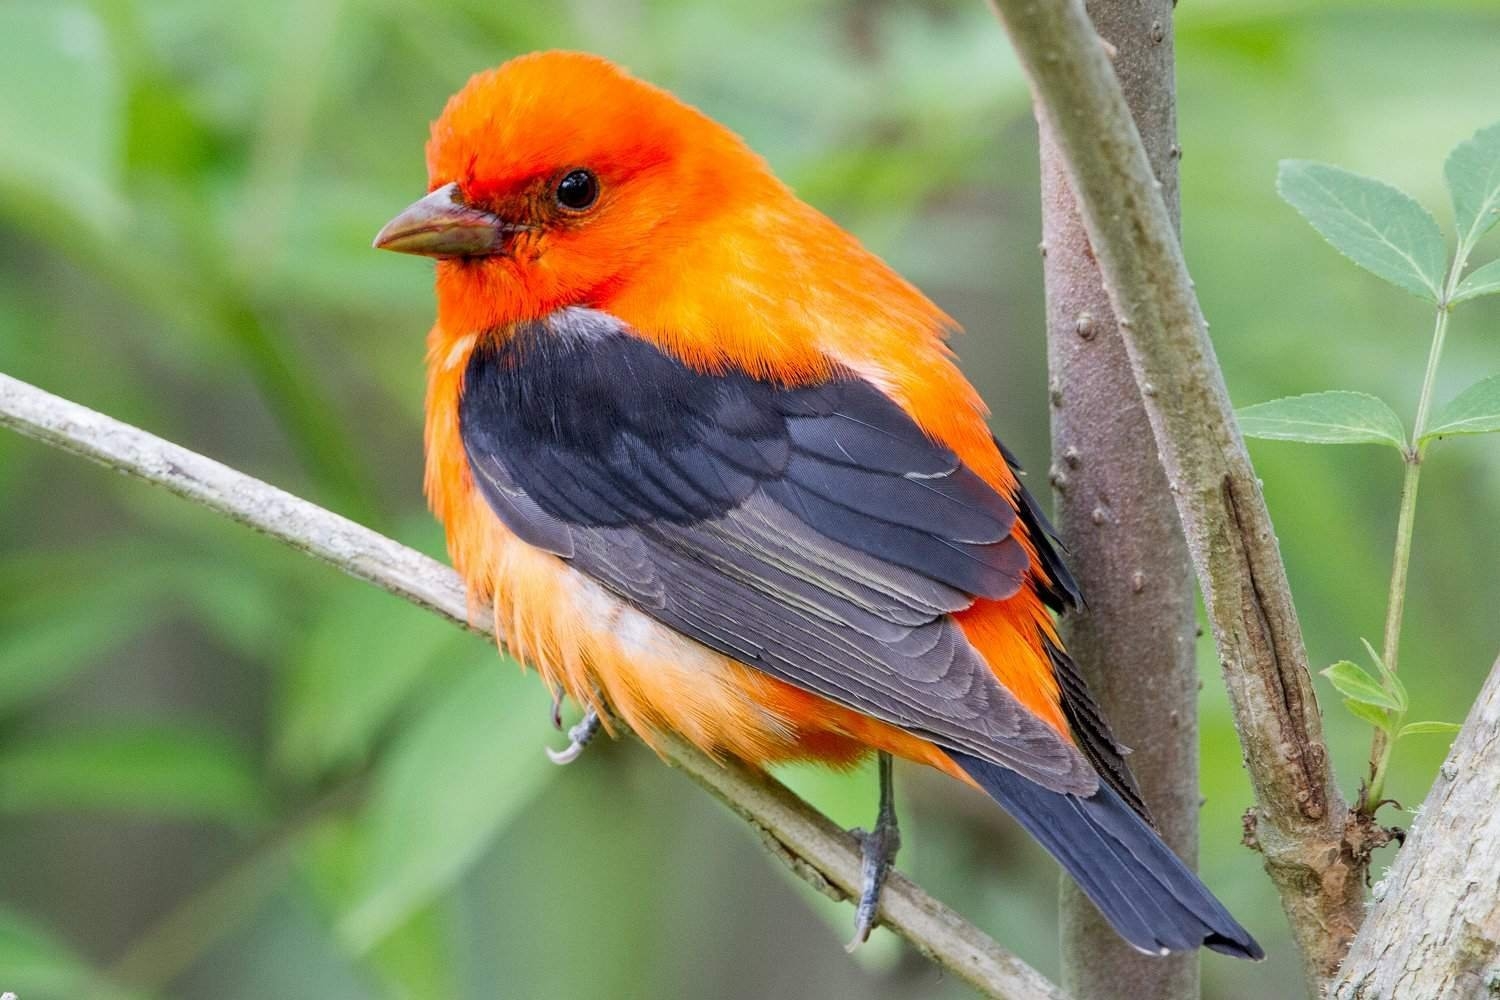 Маленькая рыжая птичка. Огненный мухоед птица. Амазонский Королевский мухоед. Танагра птица оранжевая. Рыжая танагра.